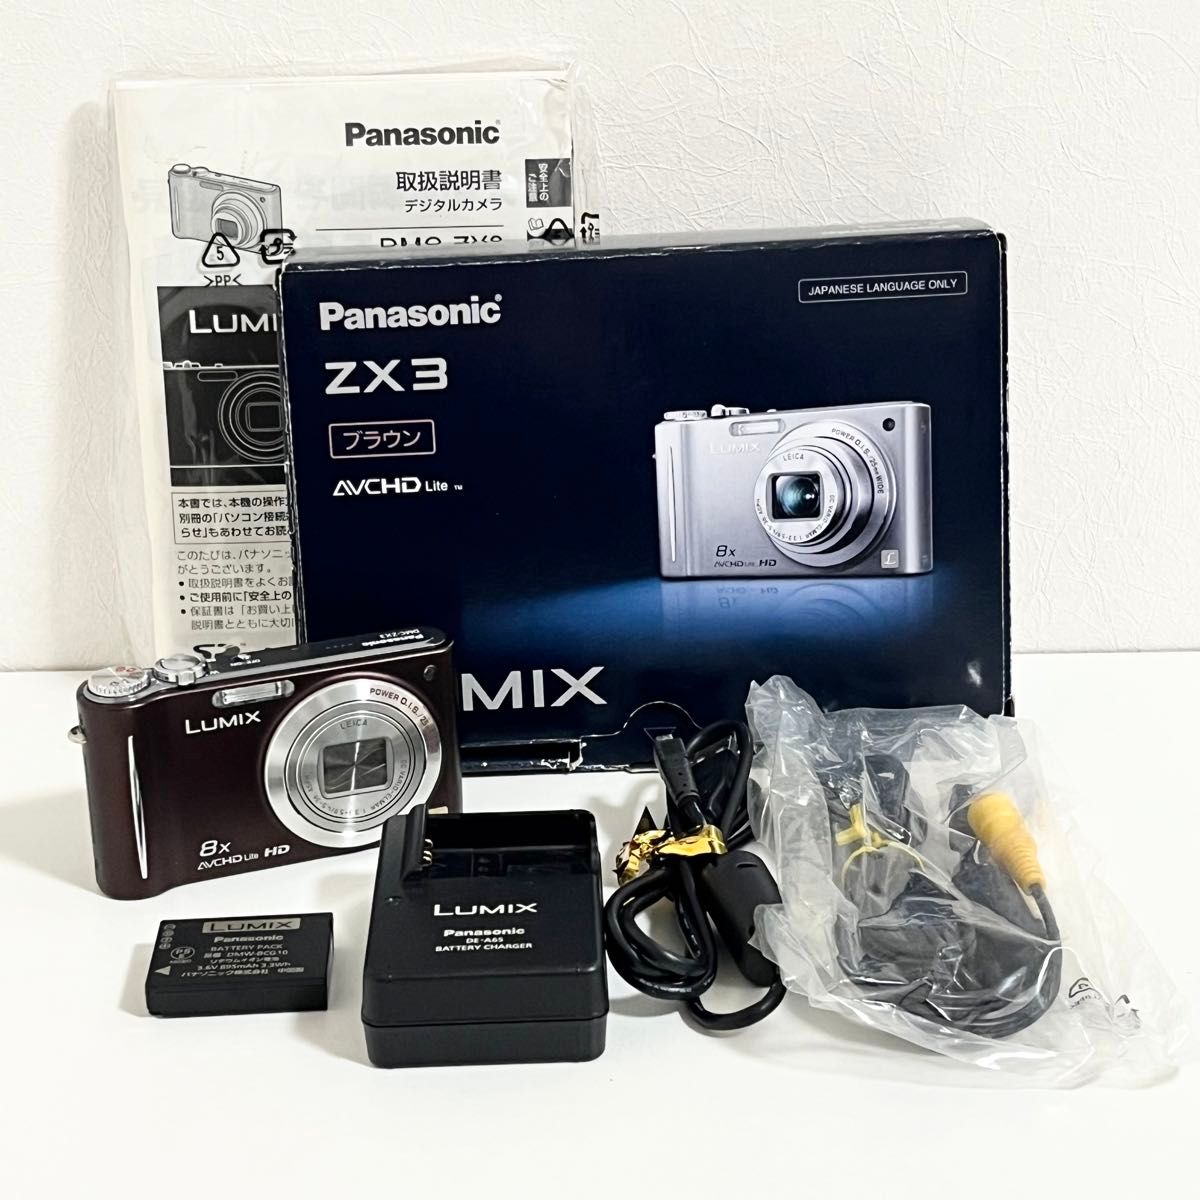 Panasonic LUMIX DMC-ZX3